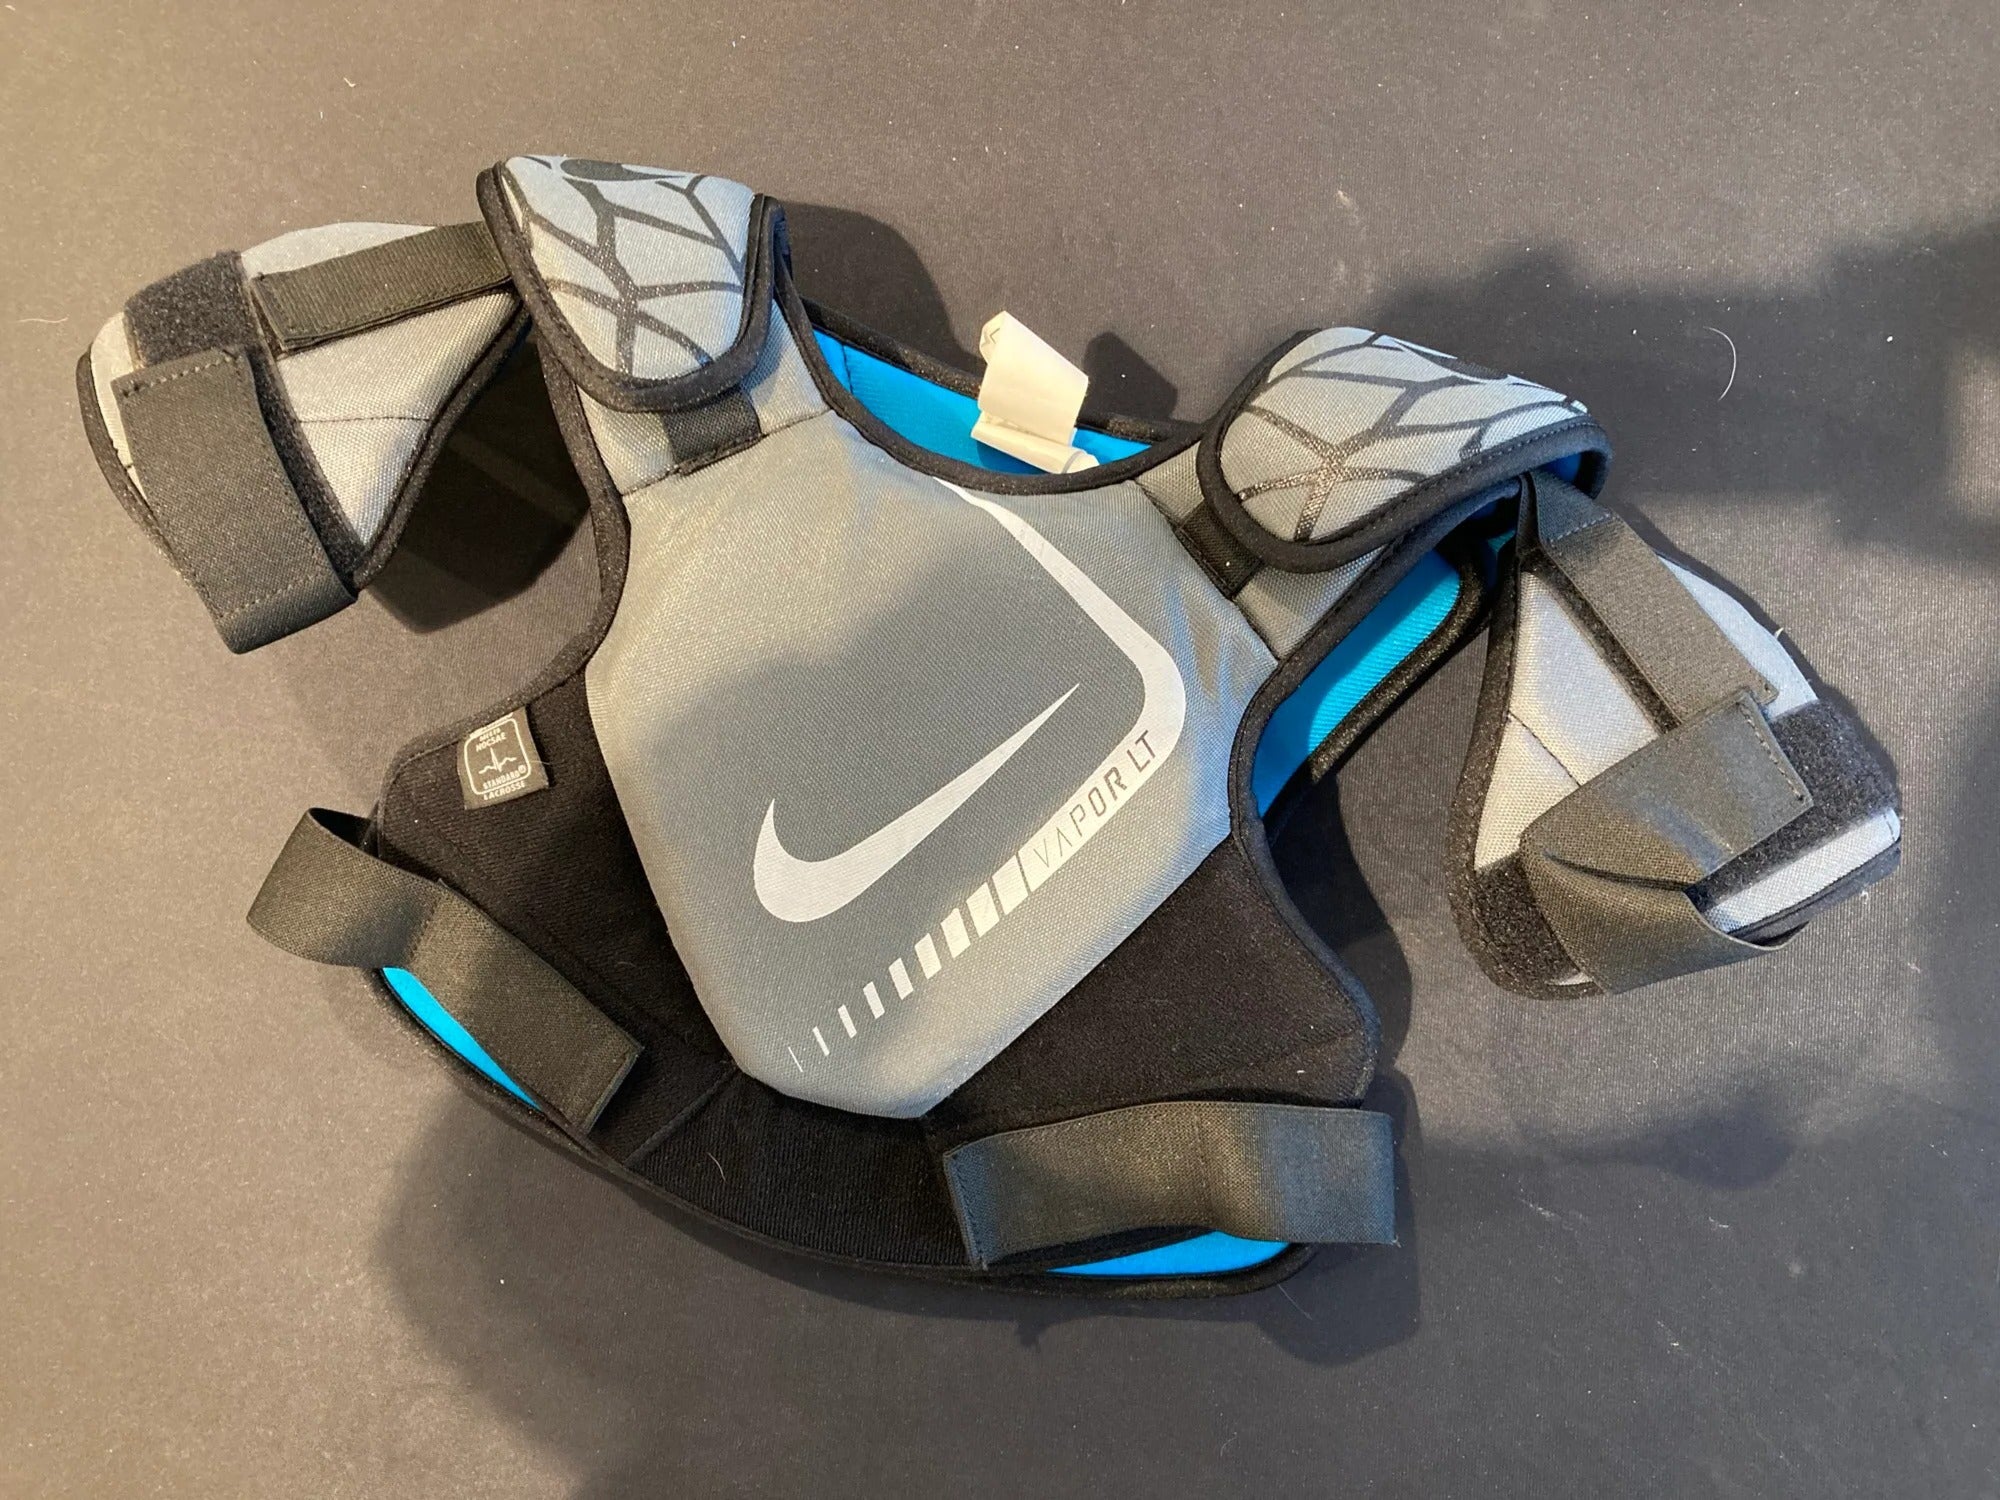 Nike Vapor Select Shoulder Pad